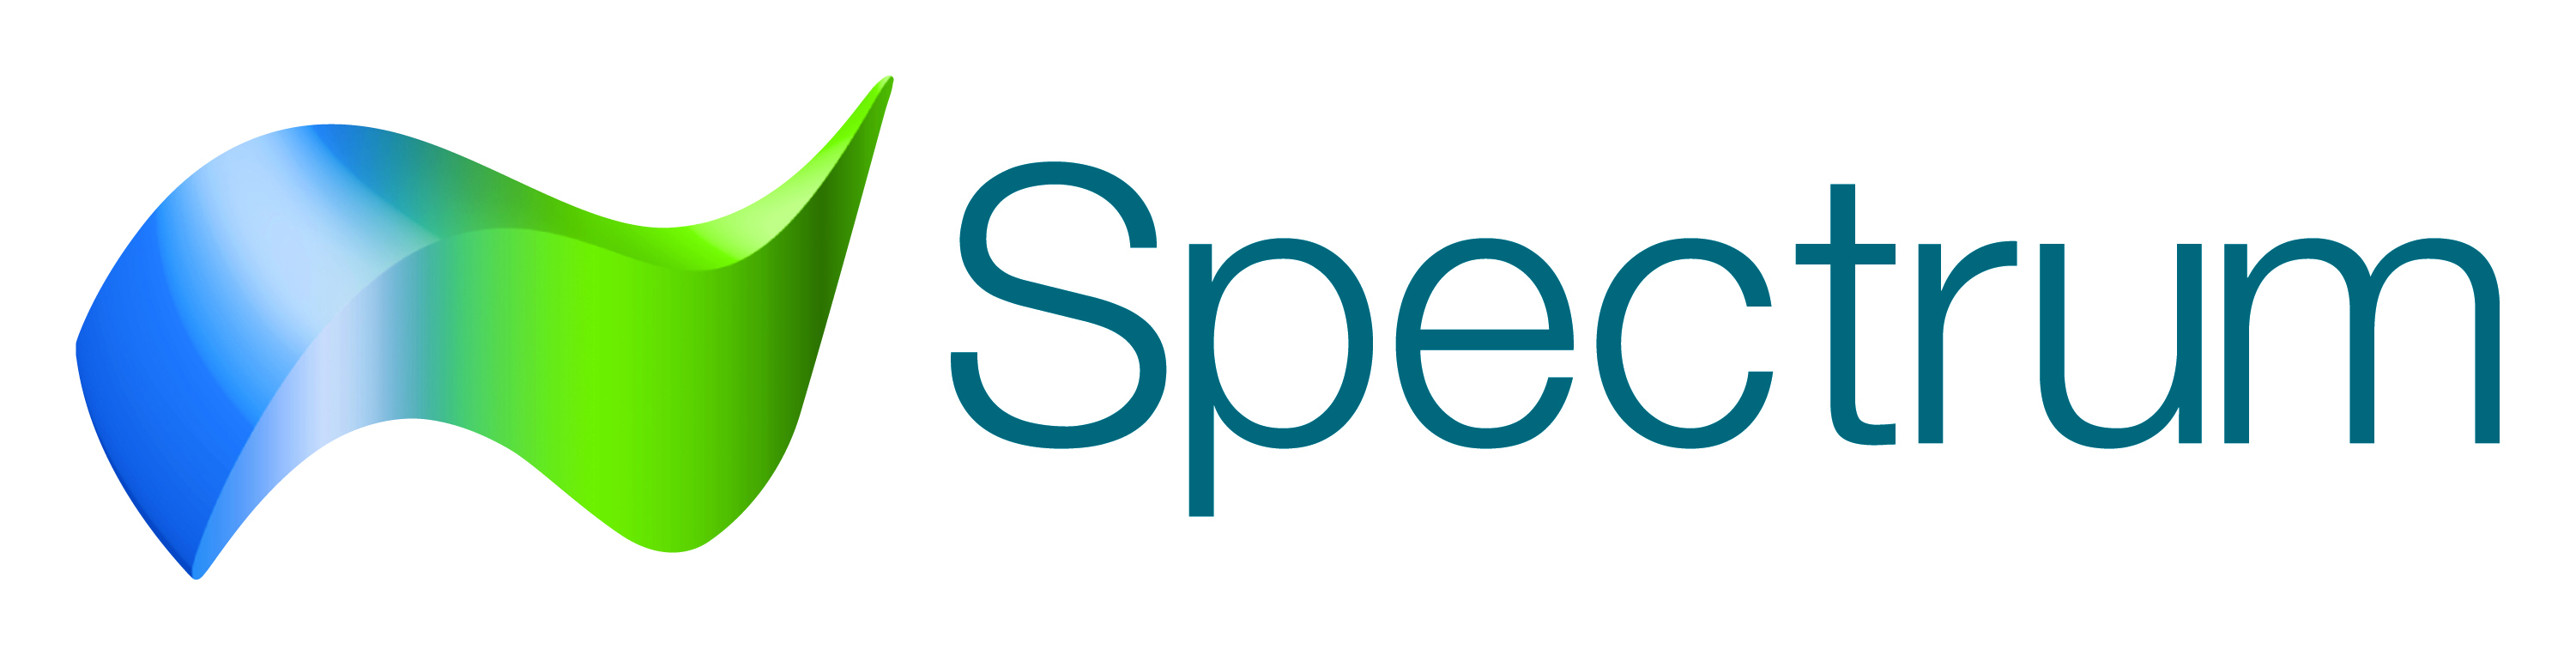 Ооо спектрум солюшнз. Spectrum логотип. Логотипы Spectrum solutions Systems. Спектрум логотип проект. Спектрум Брэндс лого.